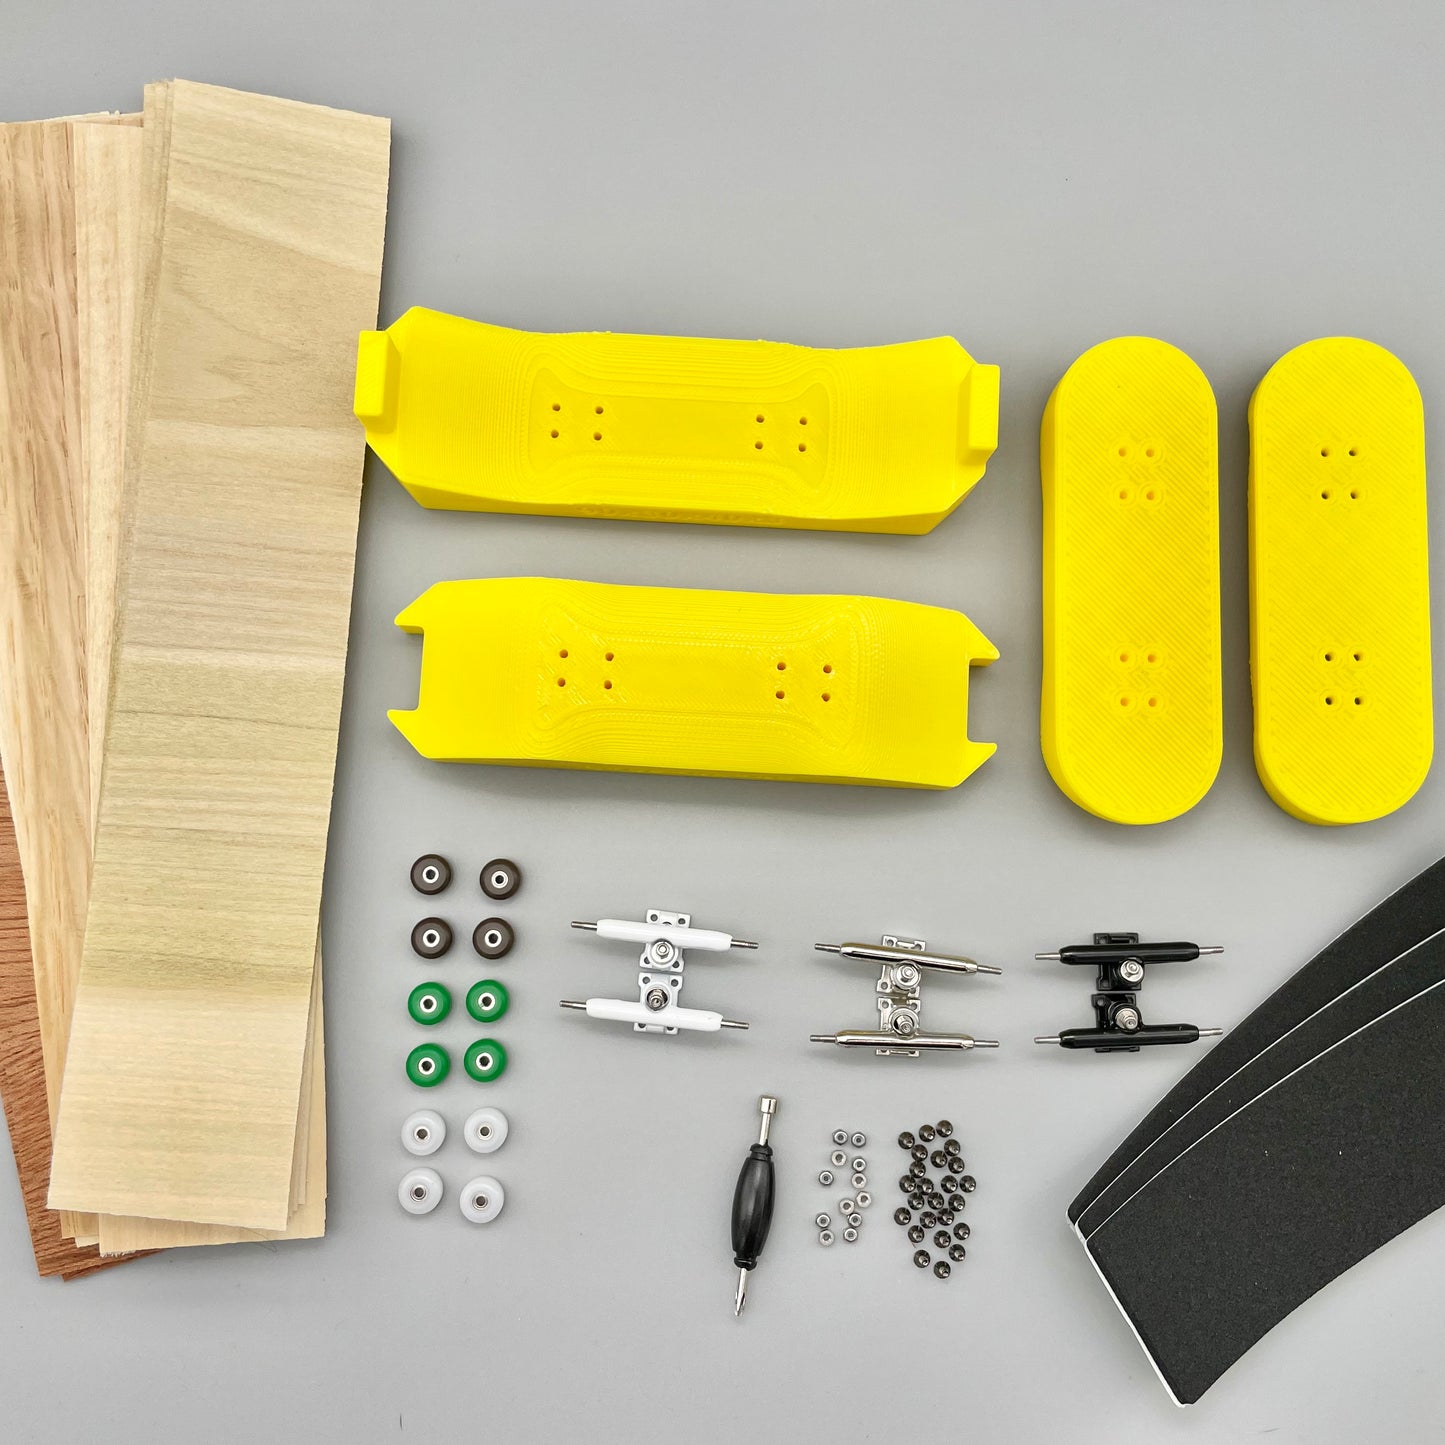 DIY Fingerboard Mold Kit - Makes 98mm x 32mm Fingerboards, 50mm wheelbase, 25º kick- Complete Kit